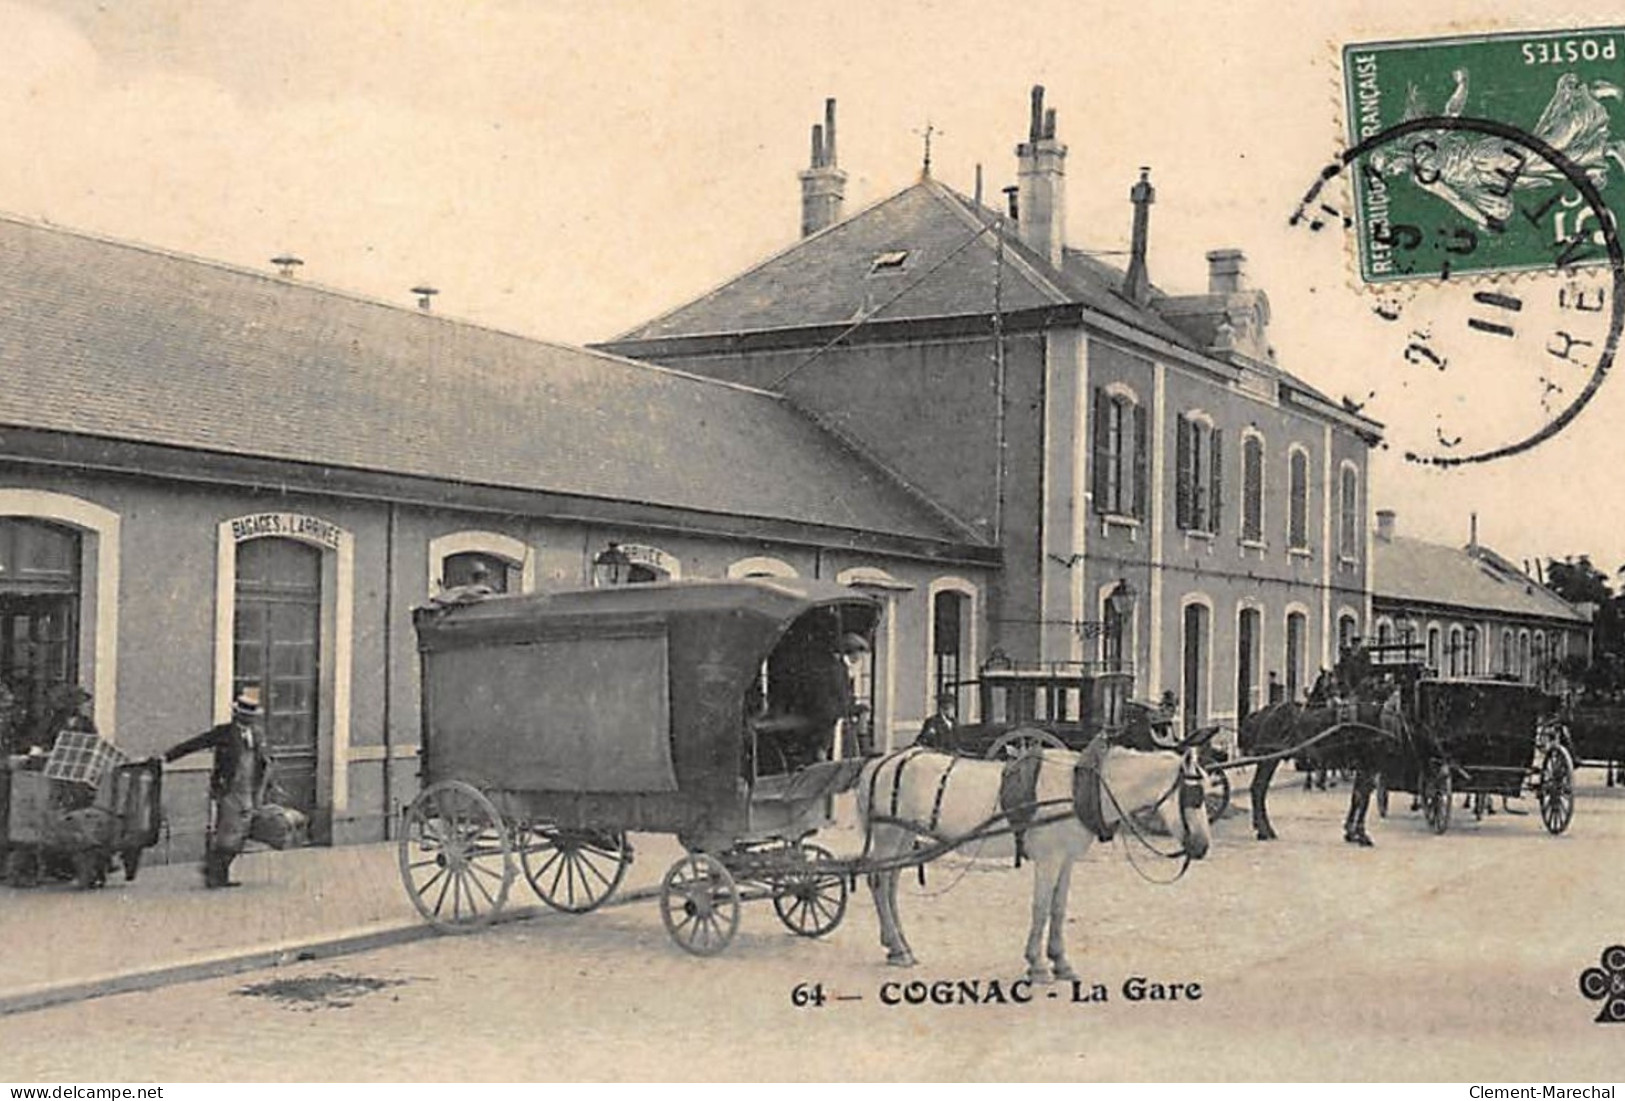 COGNAC : La Gare, Attelage - Tres Bon Etat - Cognac